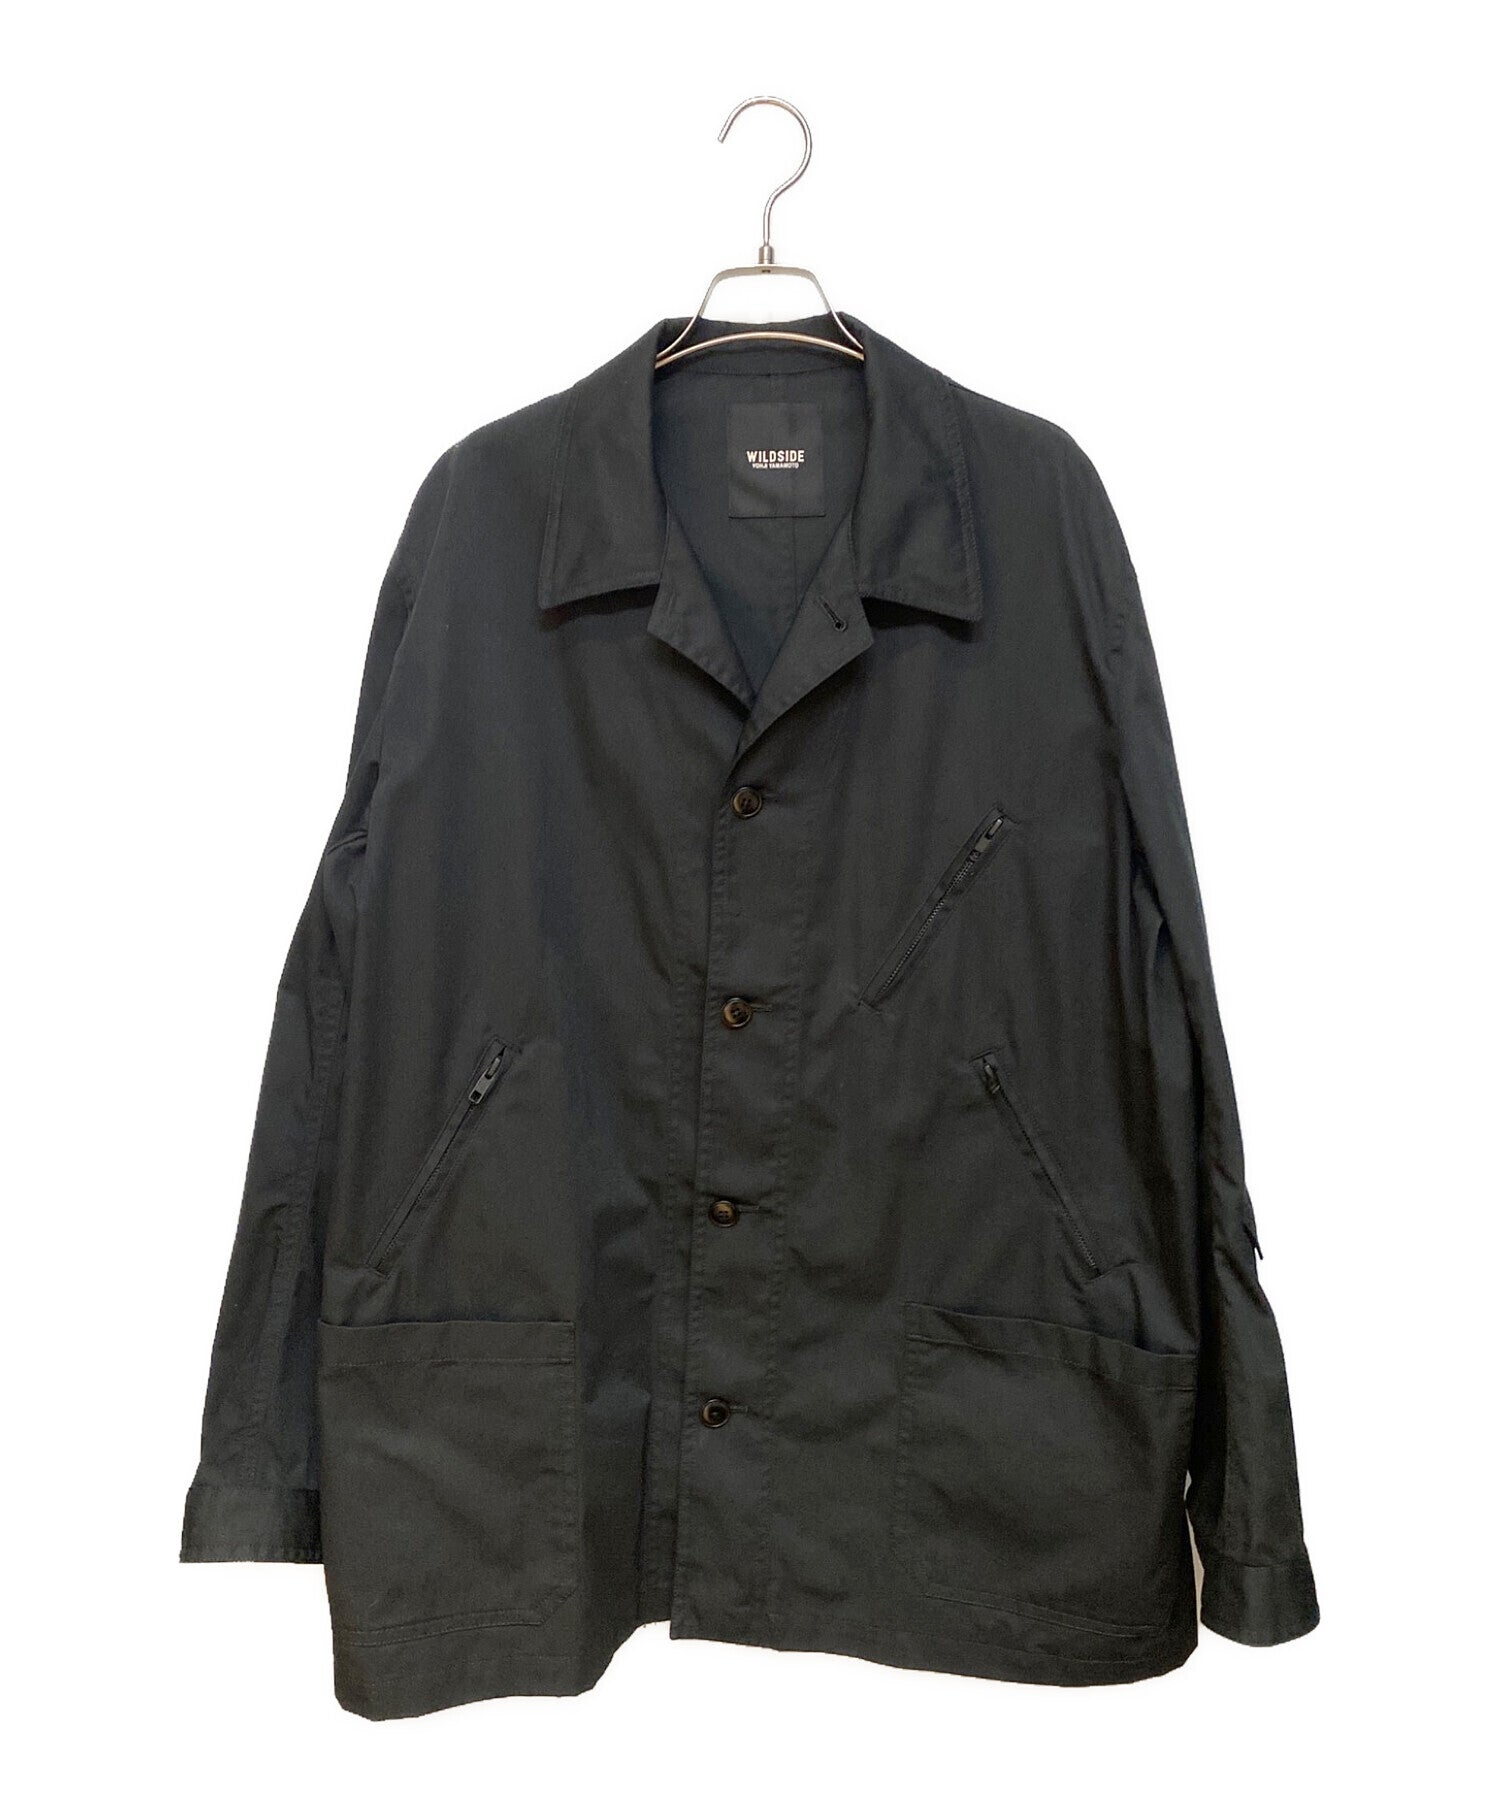 WILDSIDE YOHJI YAMAMOTO T/C Twill 5B Shirt Jacket WE-J11-900